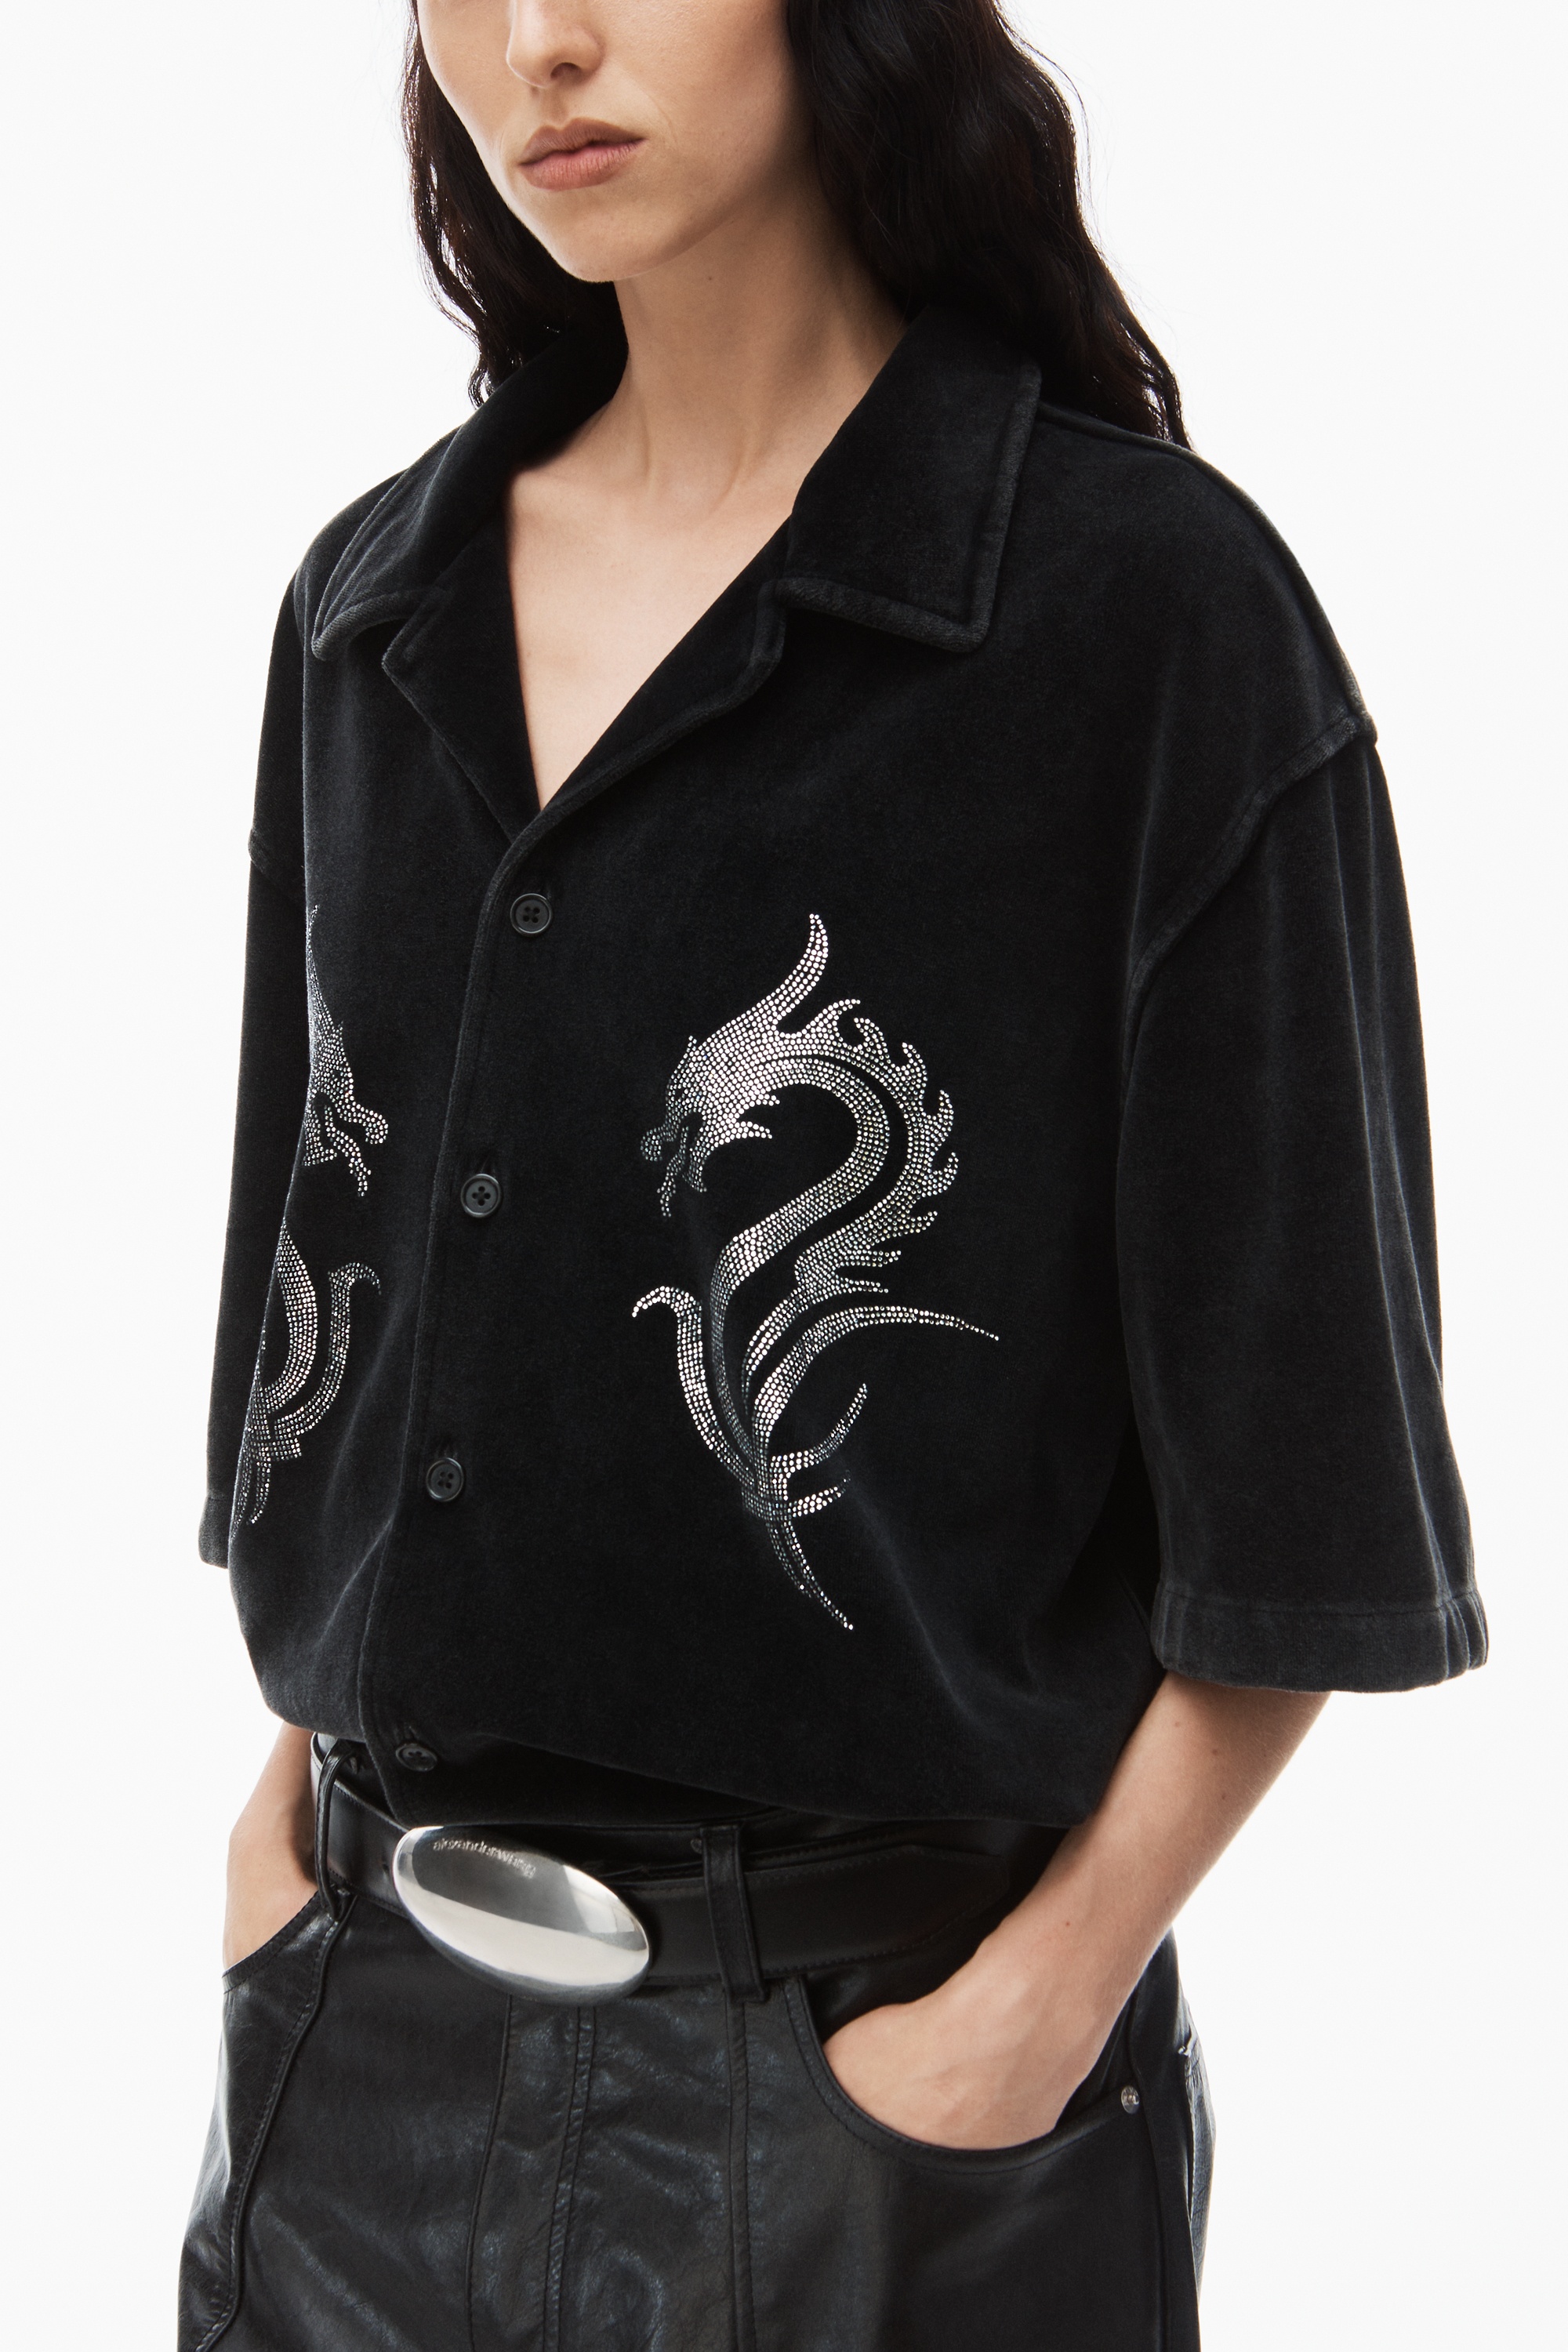 dragon hotfix shirt in velour - 5